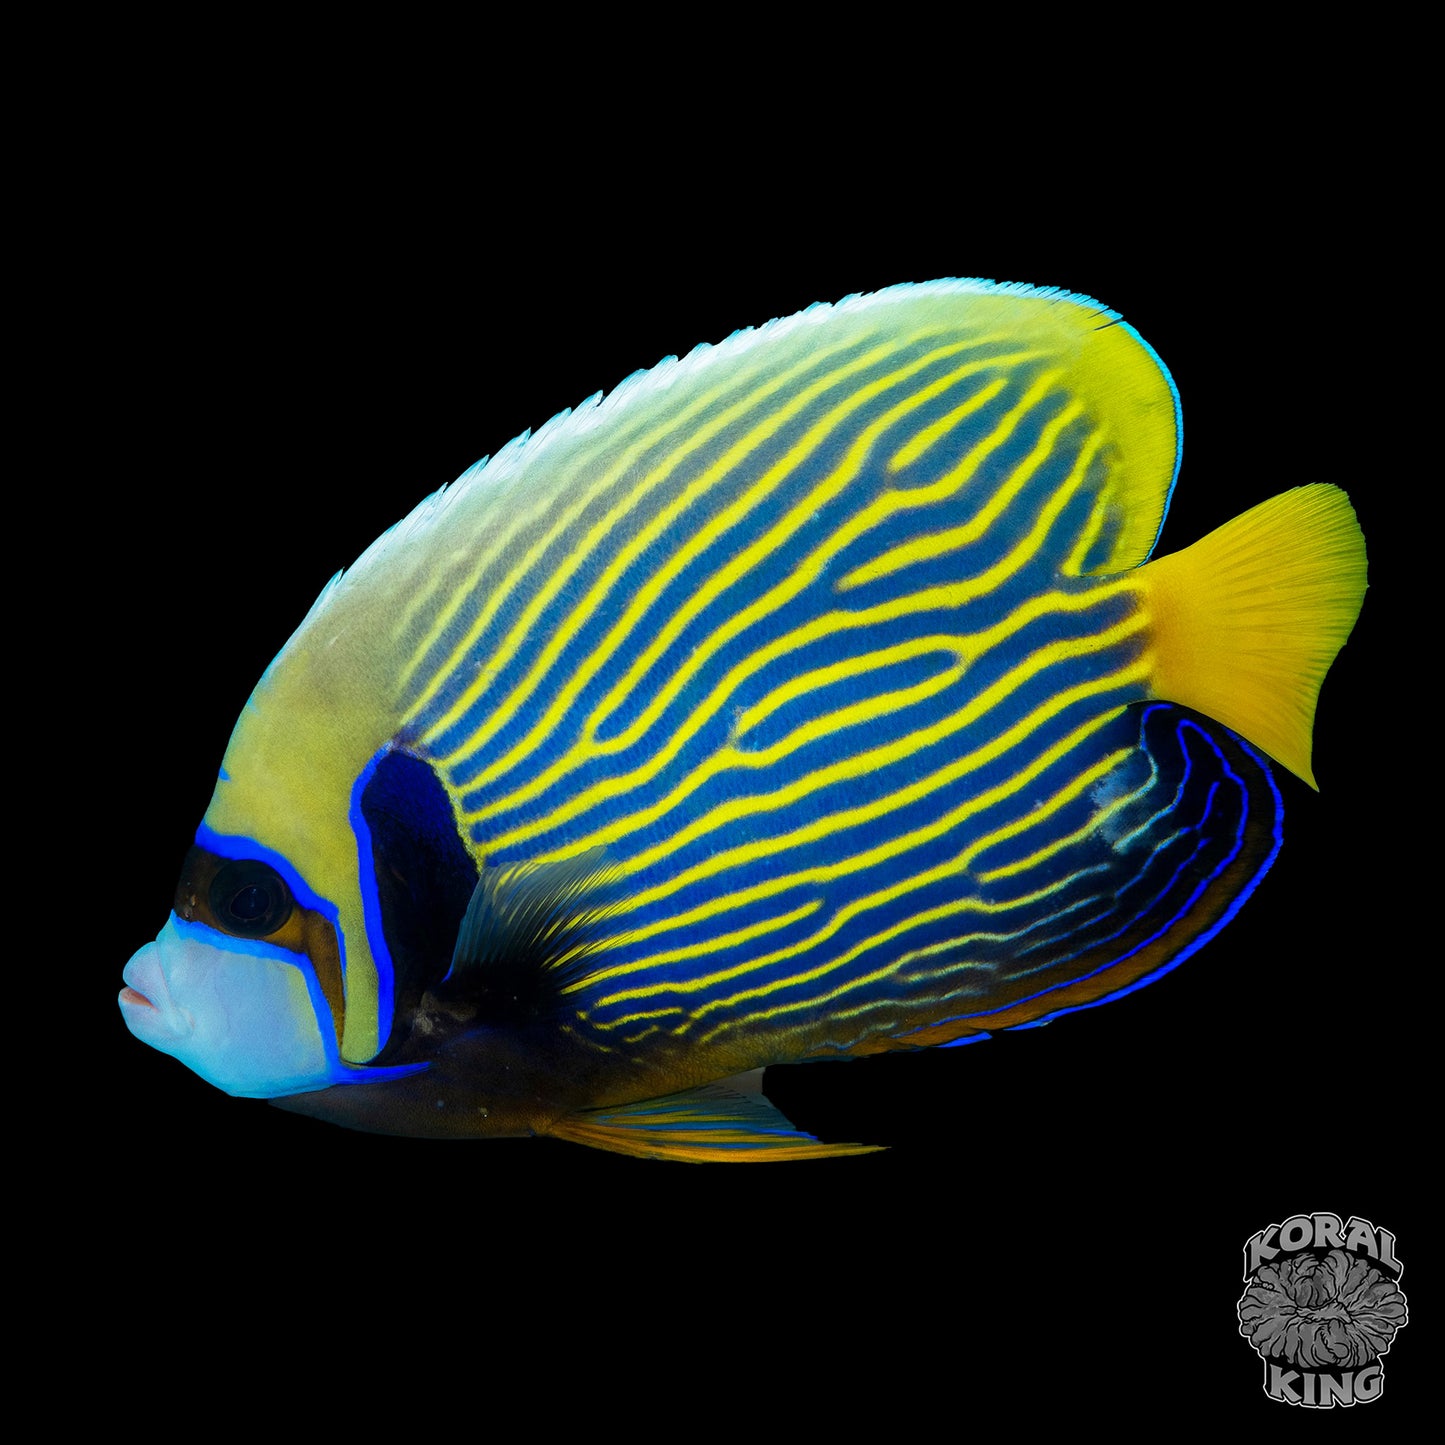 Emperor Angelfish - Koral King